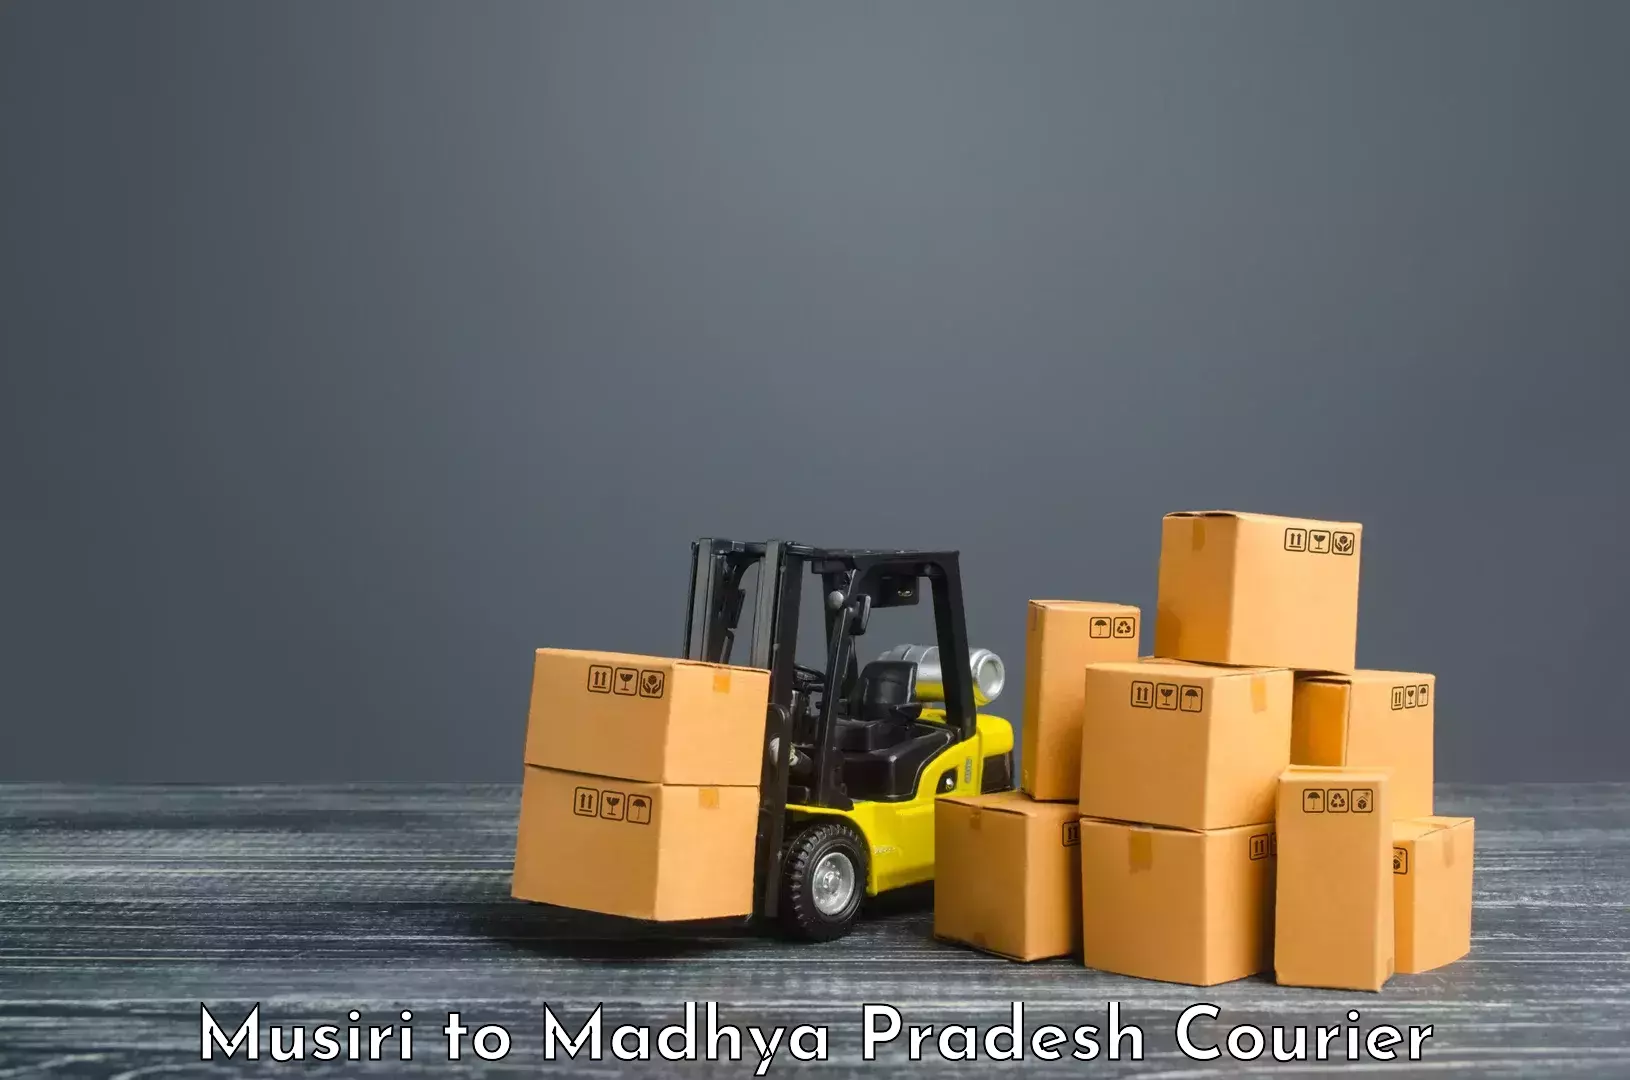 Global shipping solutions Musiri to Madhya Pradesh